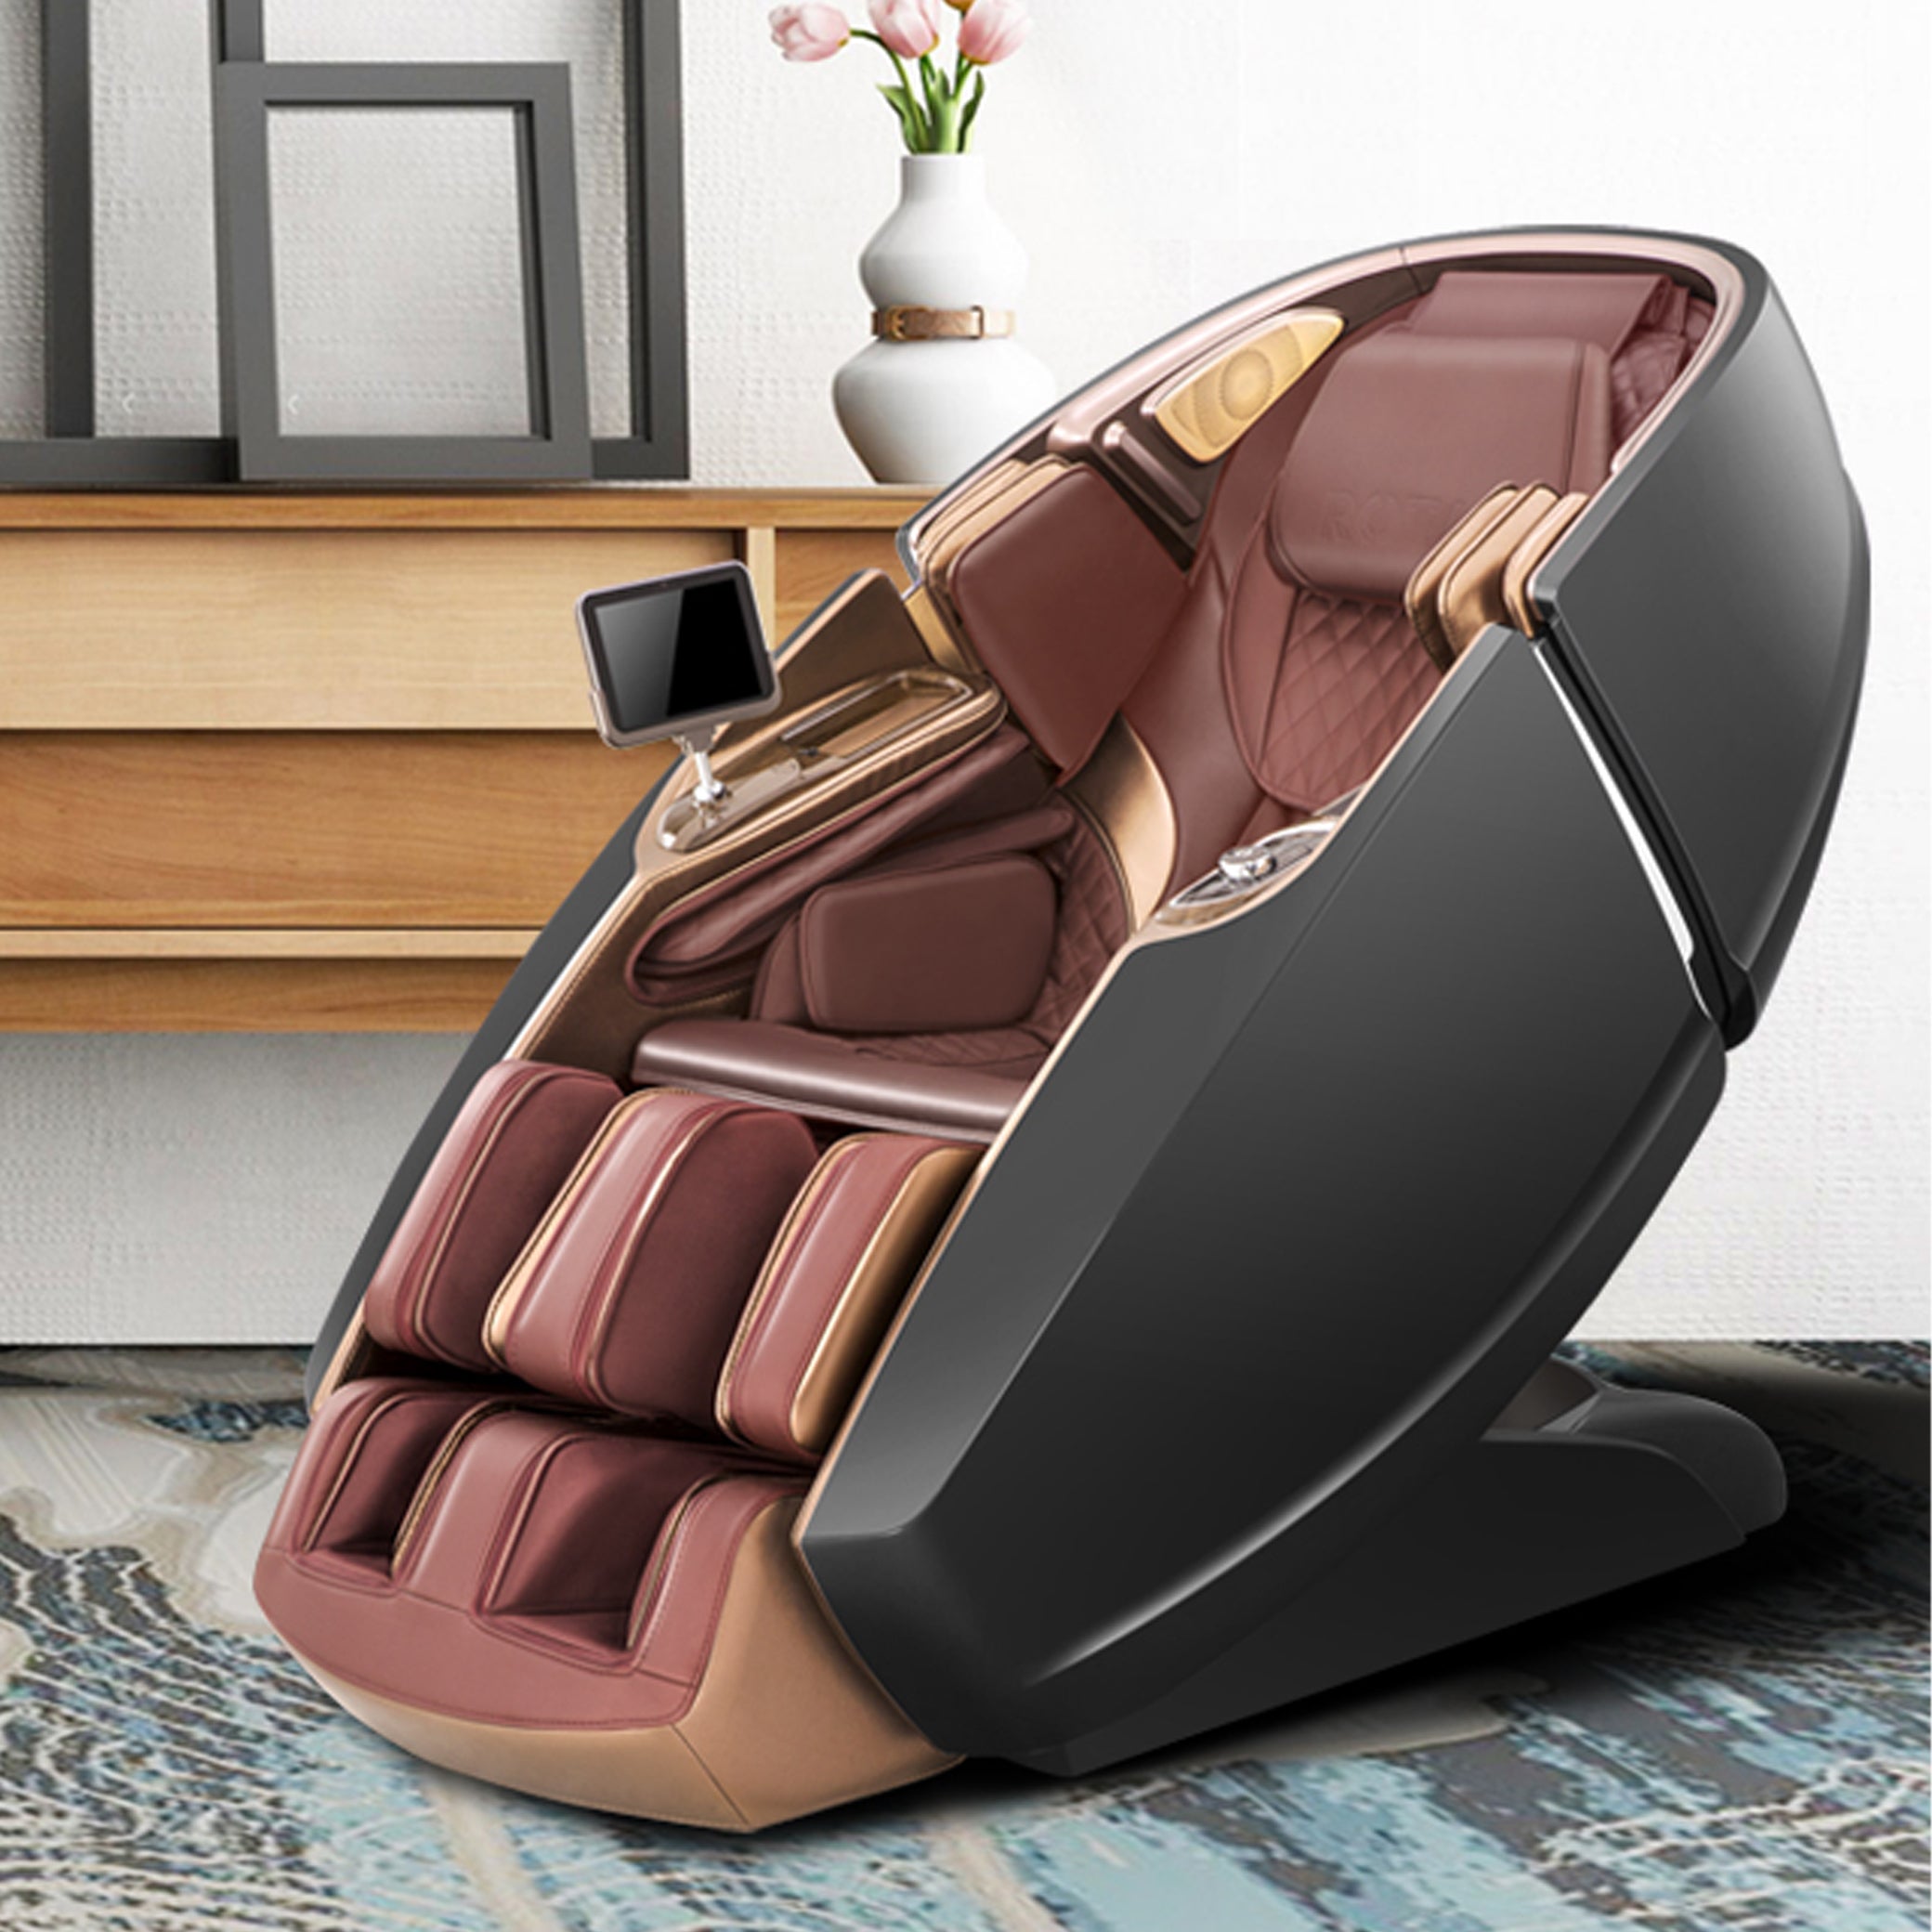 Best massage chair in UAE | Massage Cjair | Massage Chair | Gemini Luxury massage chair | massage chair | كرسي التدليك